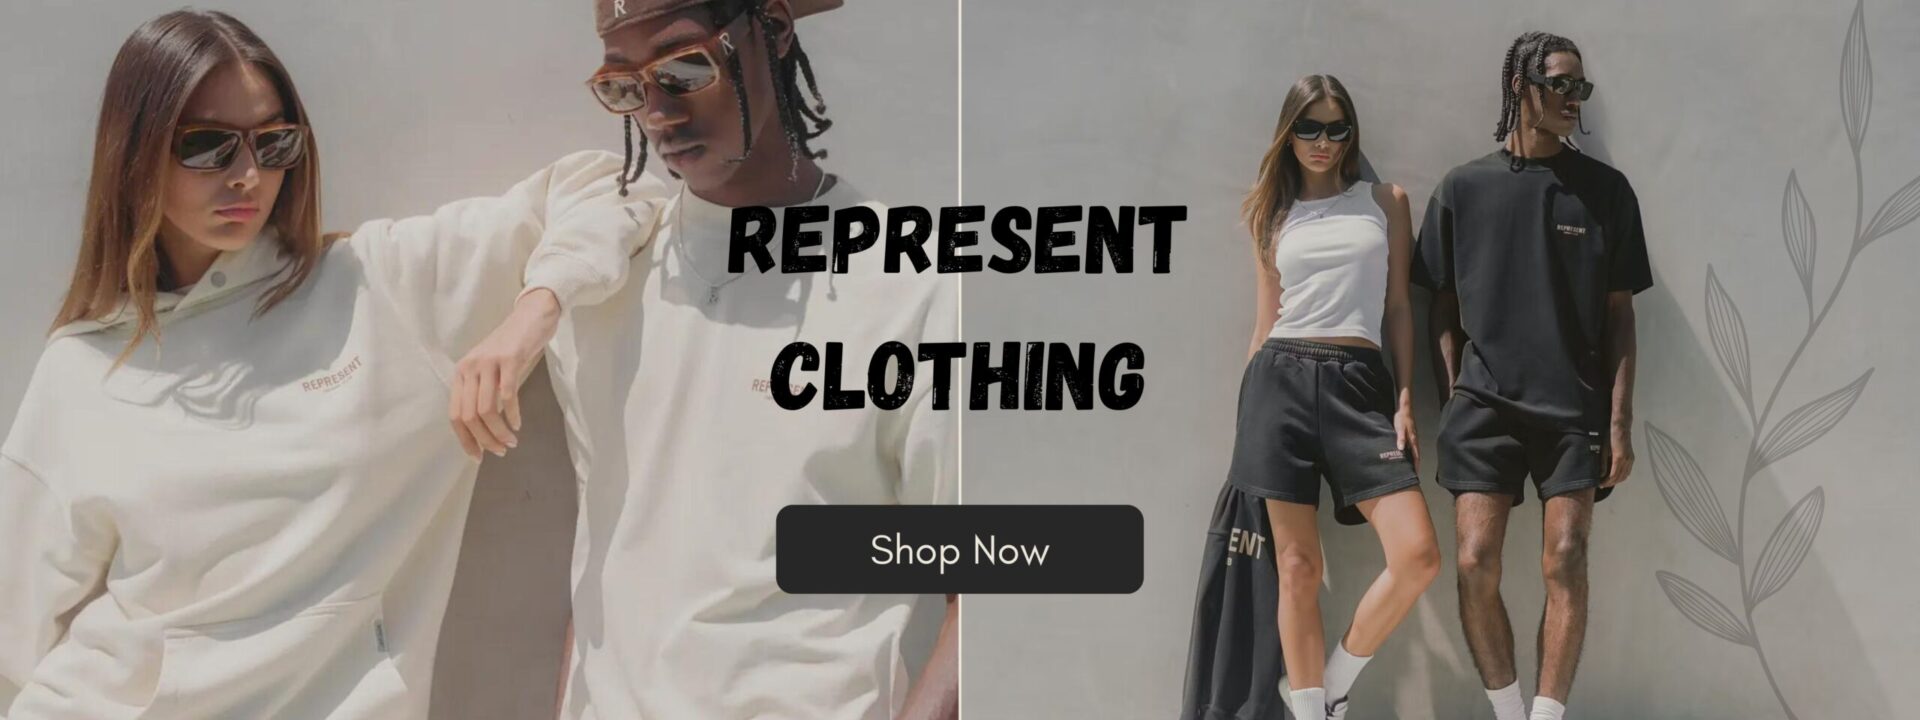 Represent clothing